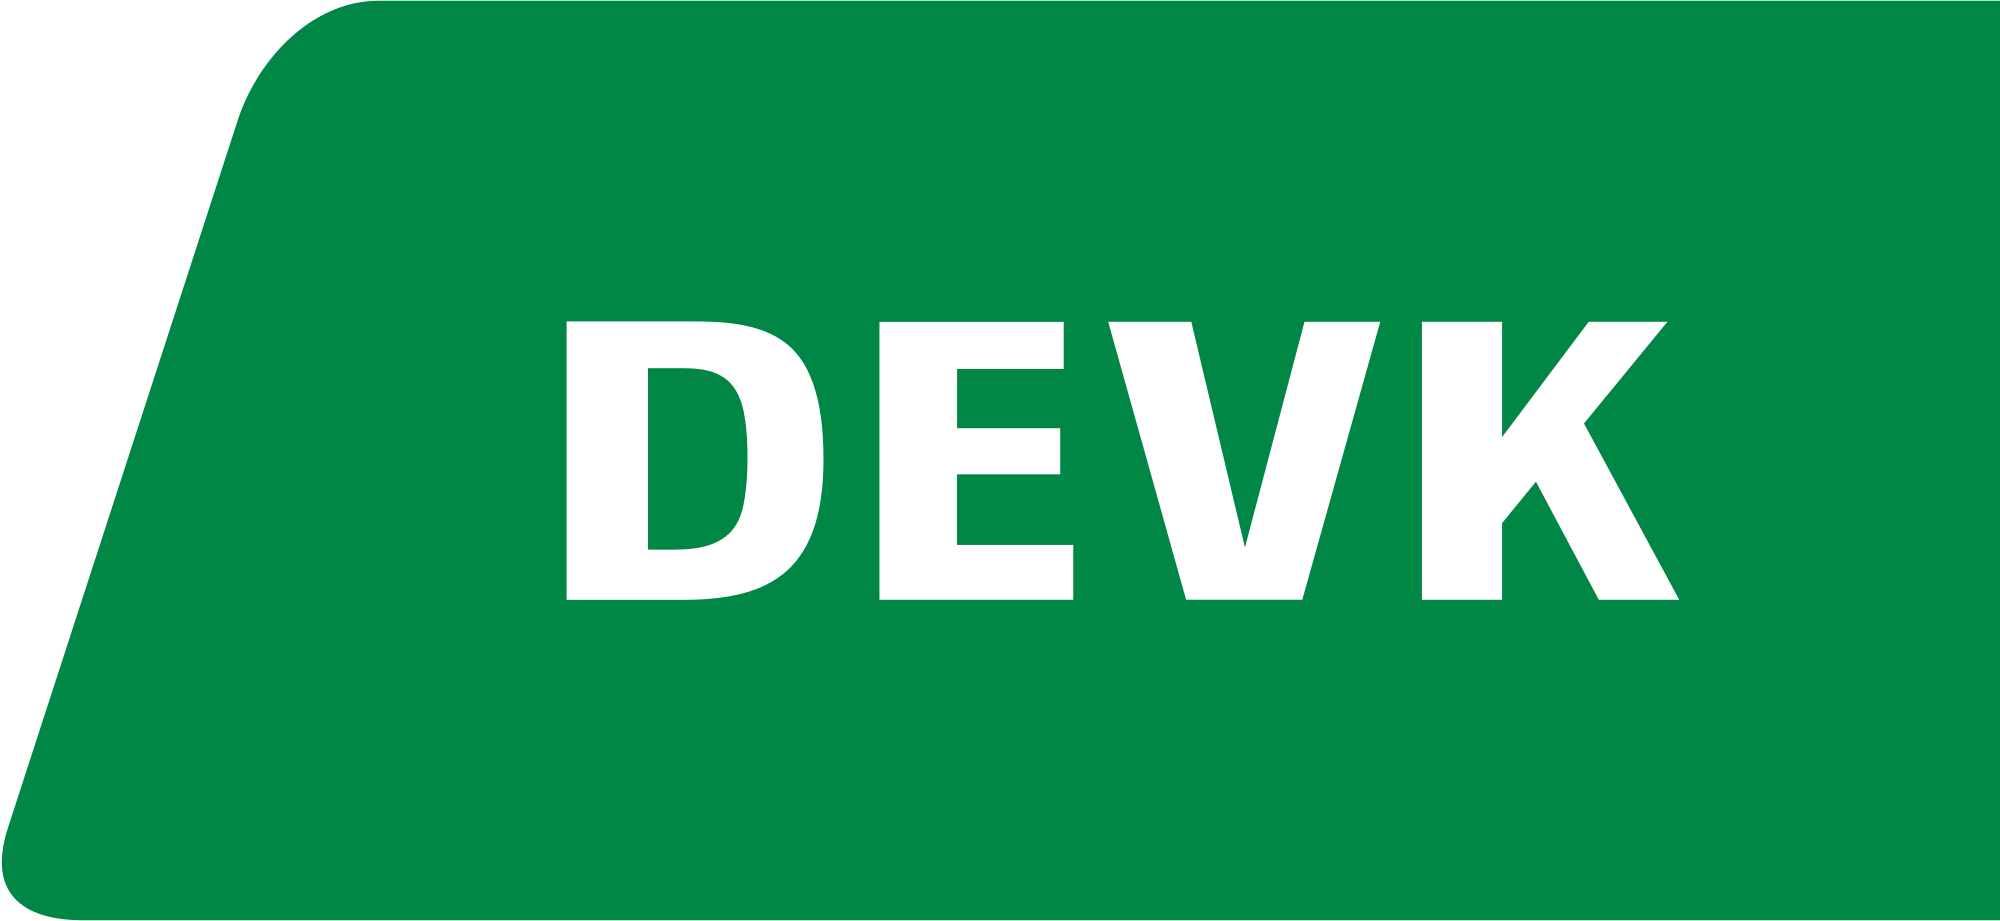 DEVK_logo